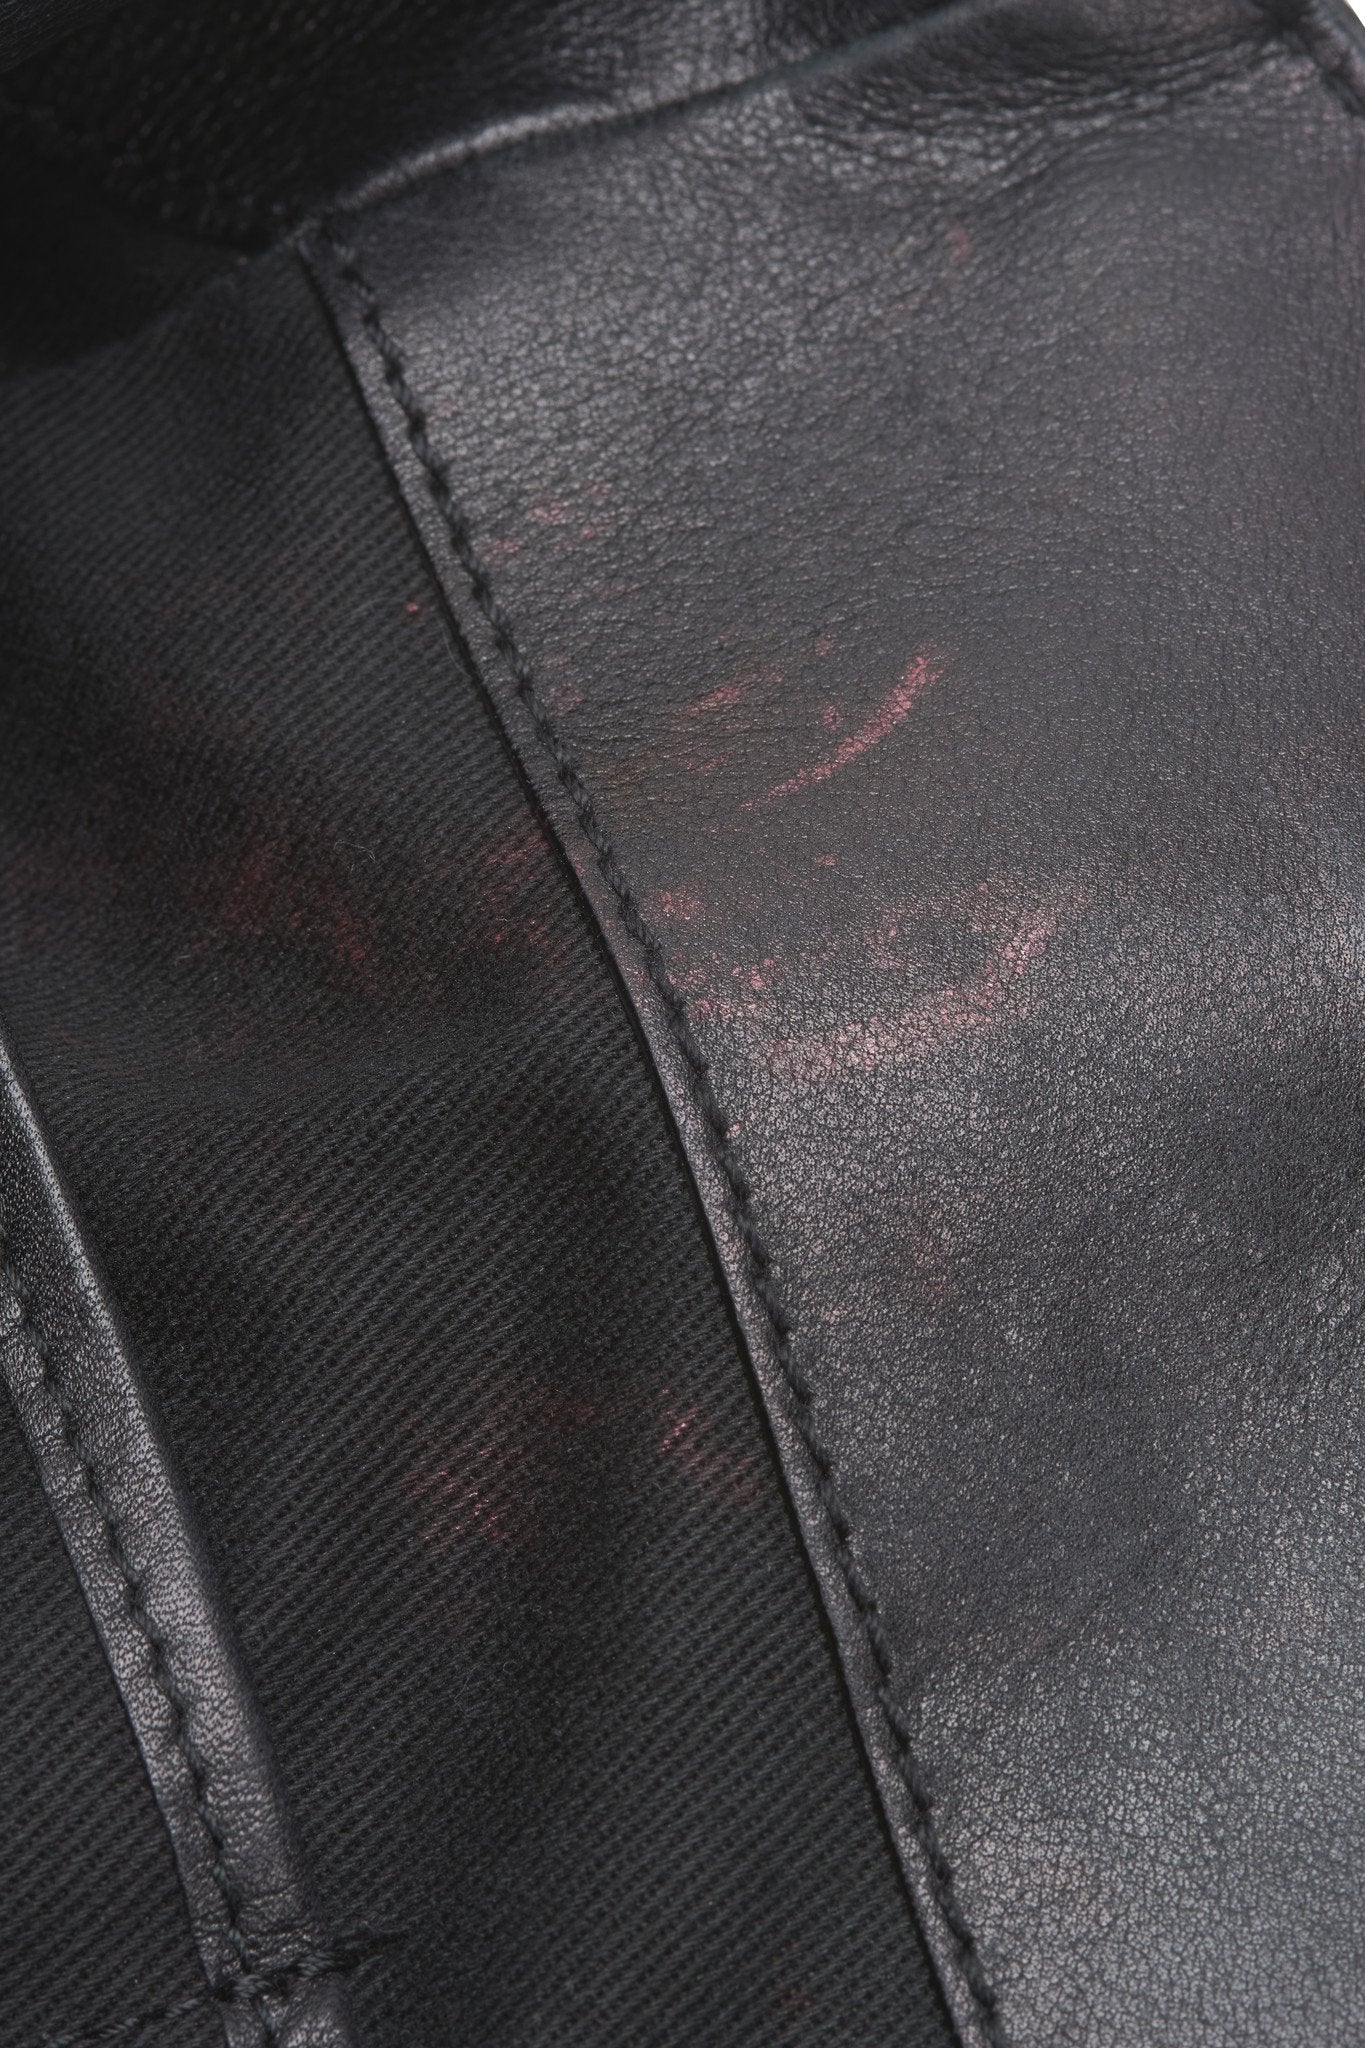 Valentino Black Leather Rockstud New Dome Bucket Bag